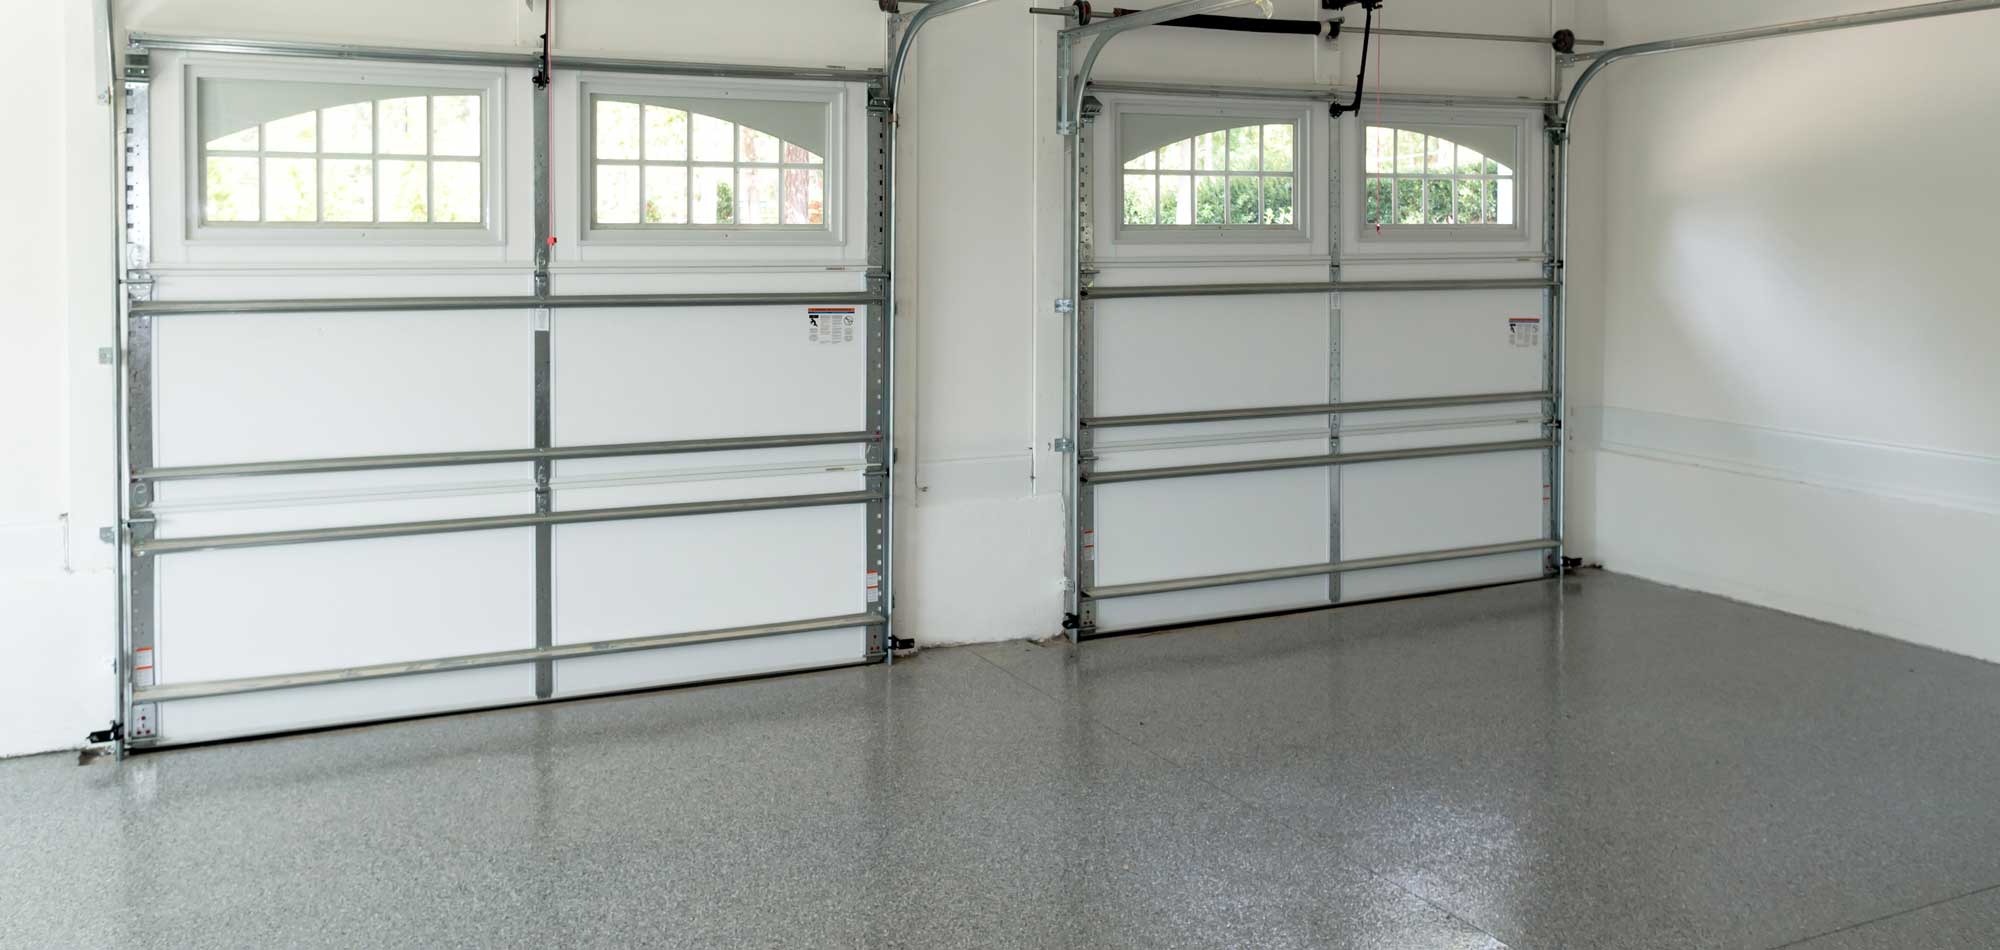 Garage Floor Epoxy Installation Cost - 2022 Price Guide